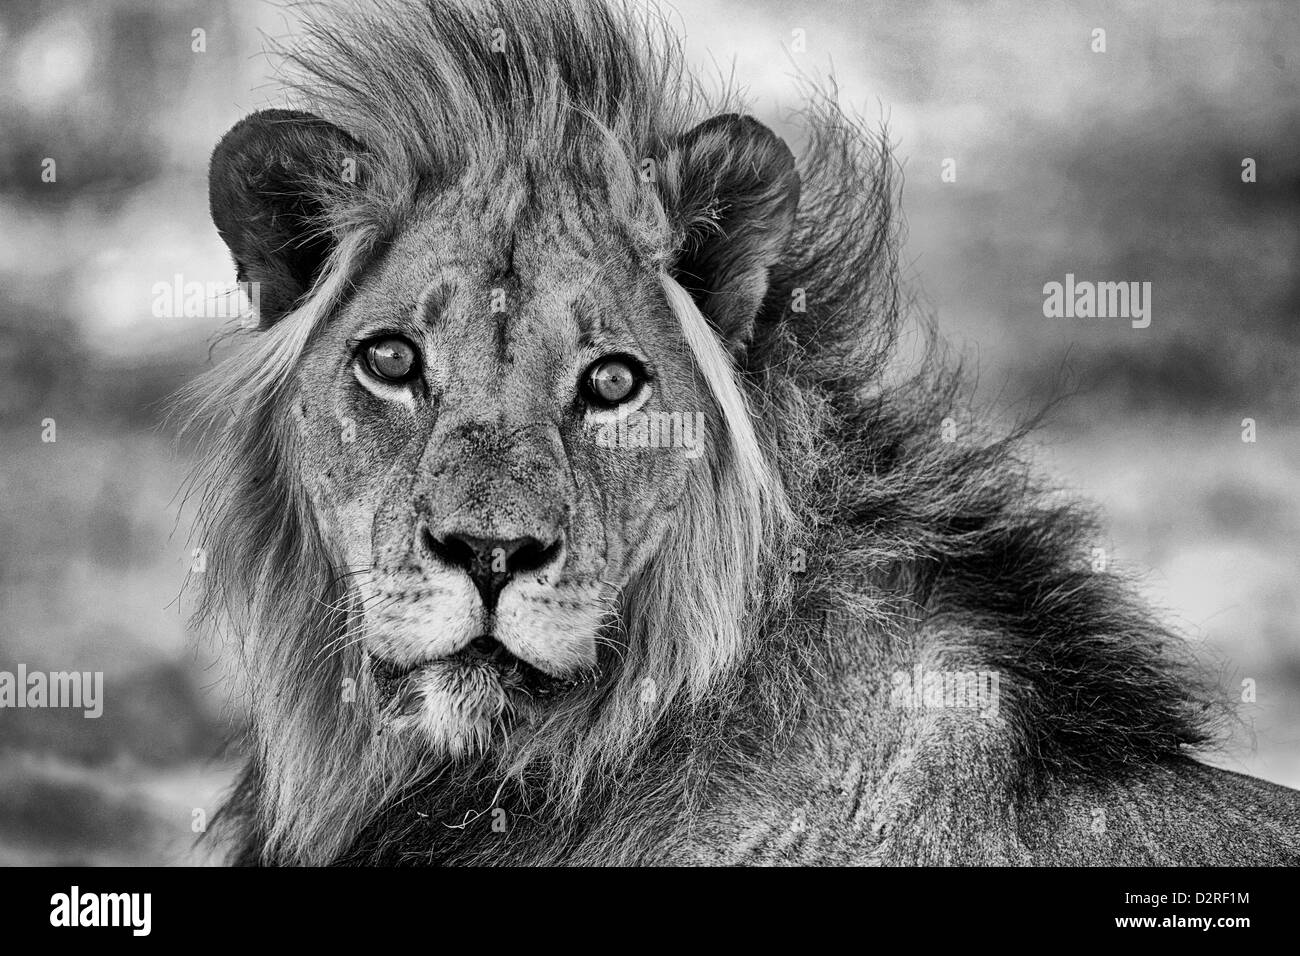 Portrait of a big male lion in black and white, Africa, Afrika, Kalahari desert. dominant, schwarz weiß, s/w, aggressive Stock Photo